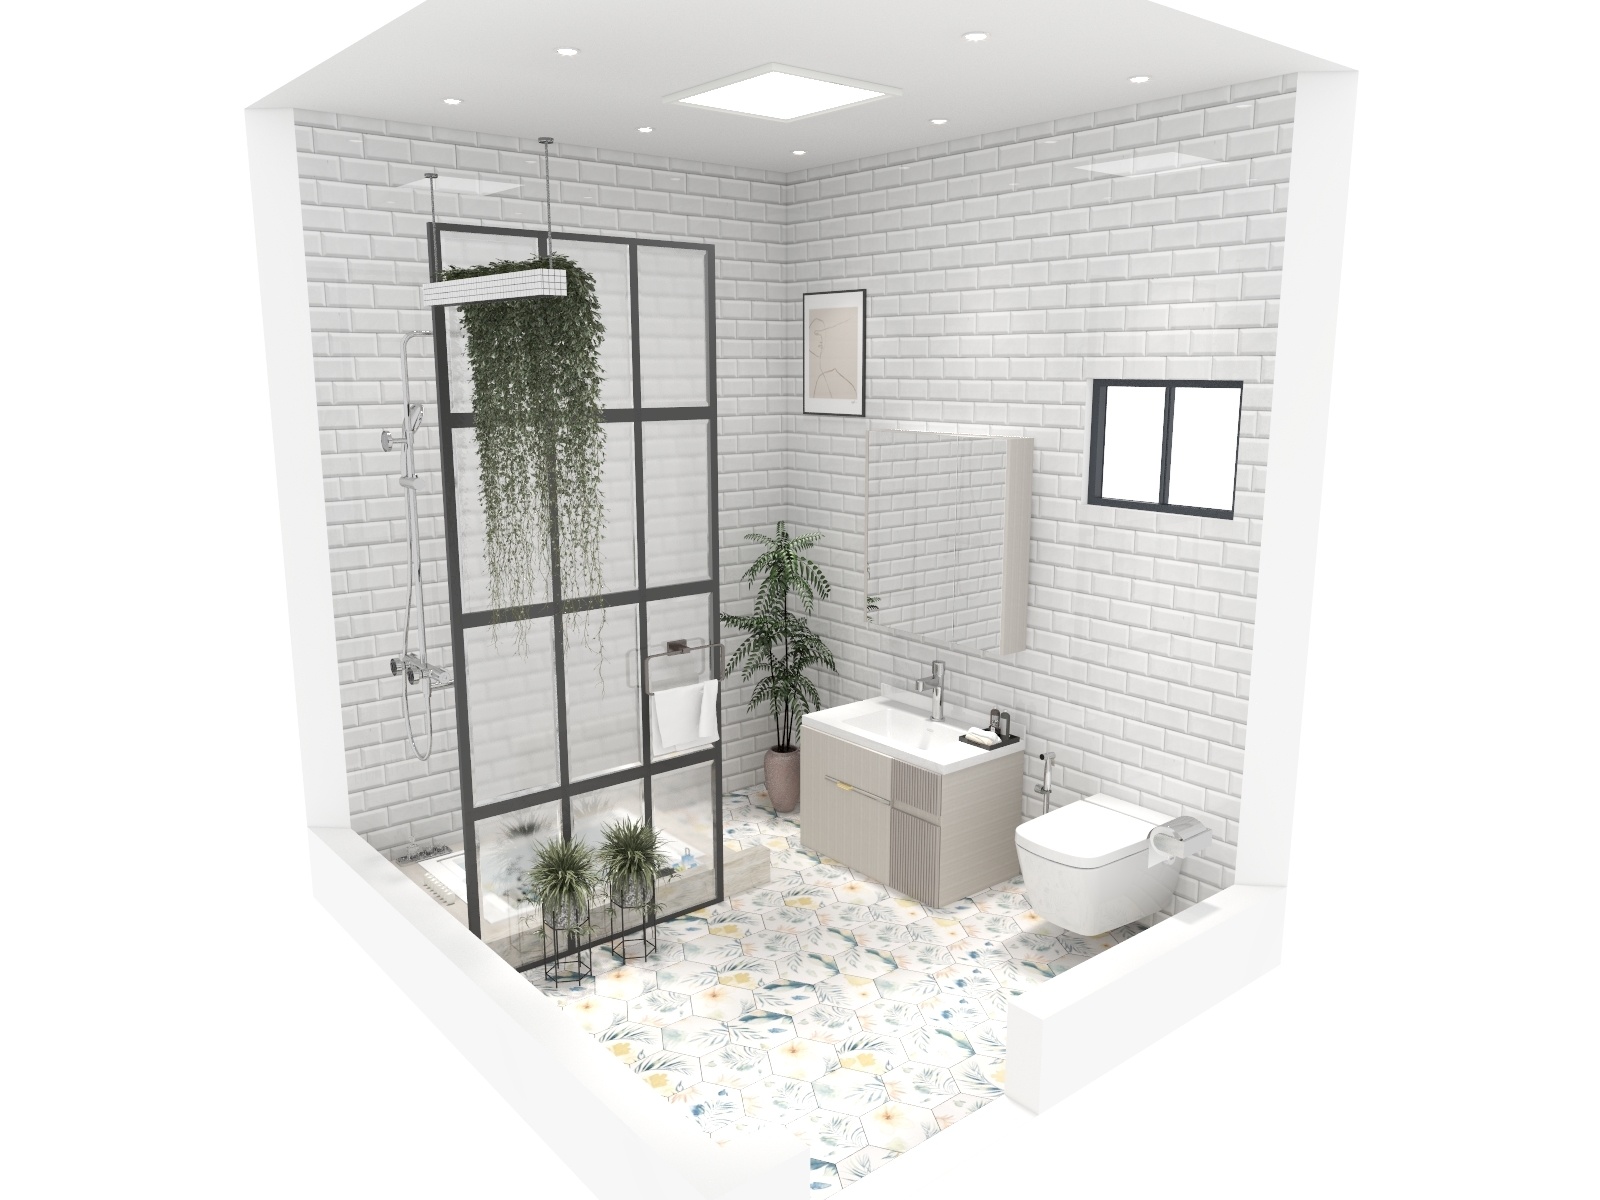 donia_yassen的装修设计方案:interior shots for bathroom